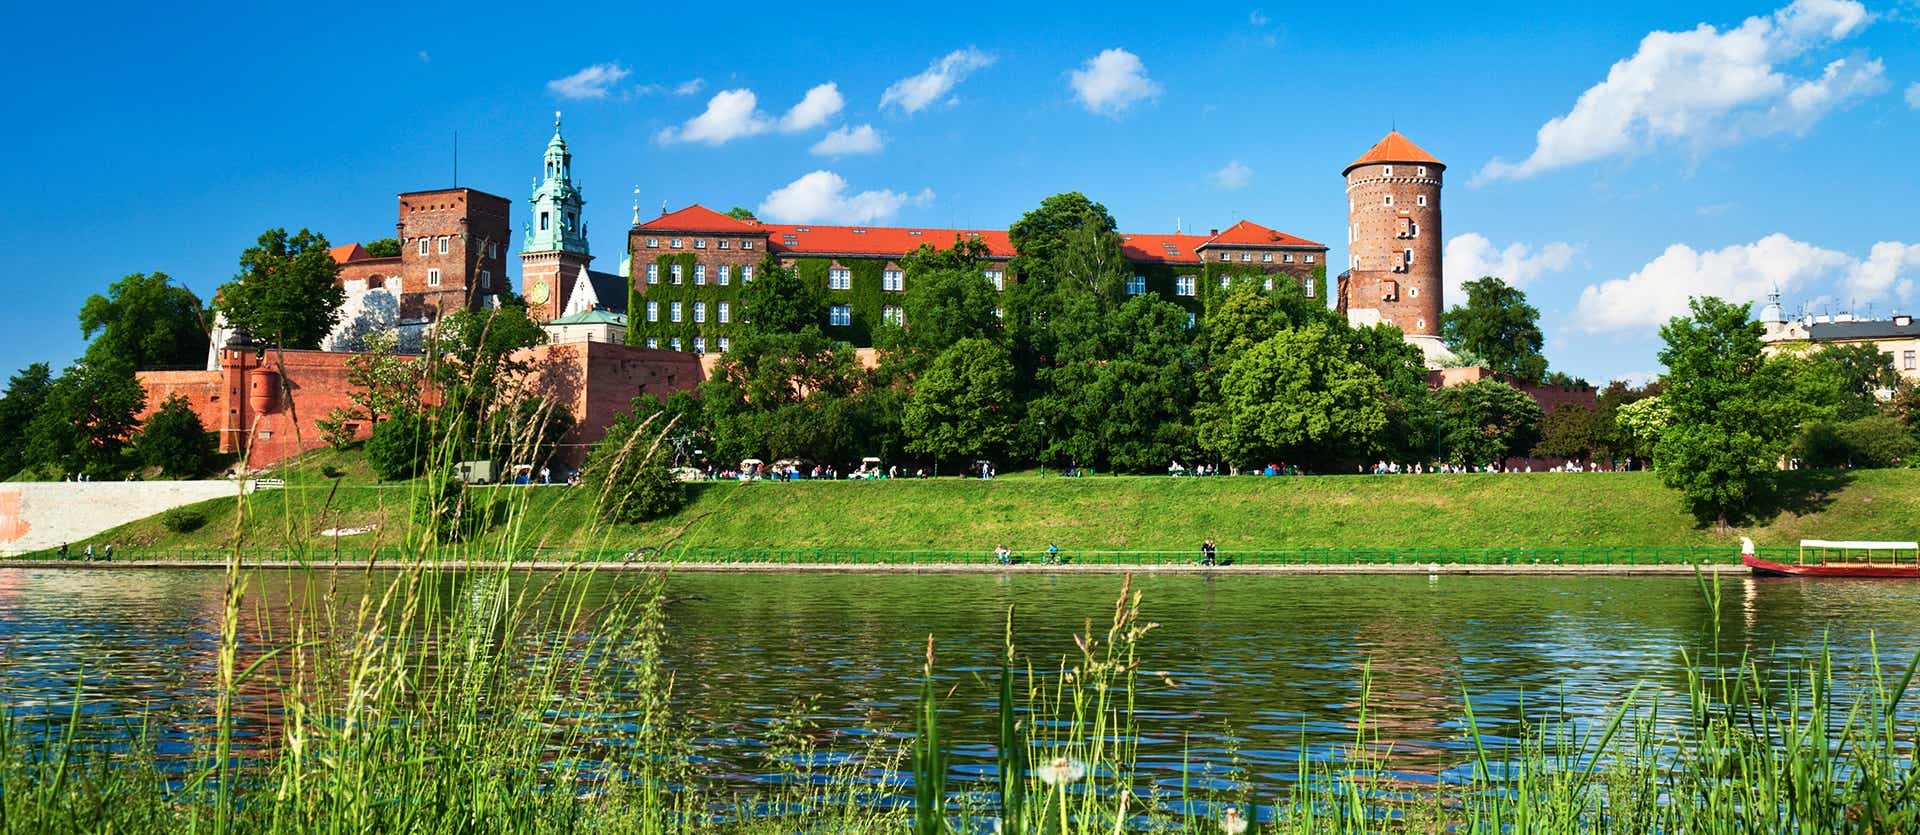 Wawel Castle & River Vistula <span class="iconos separador"></span> Krakow <span class="iconos separador"></span> Poland